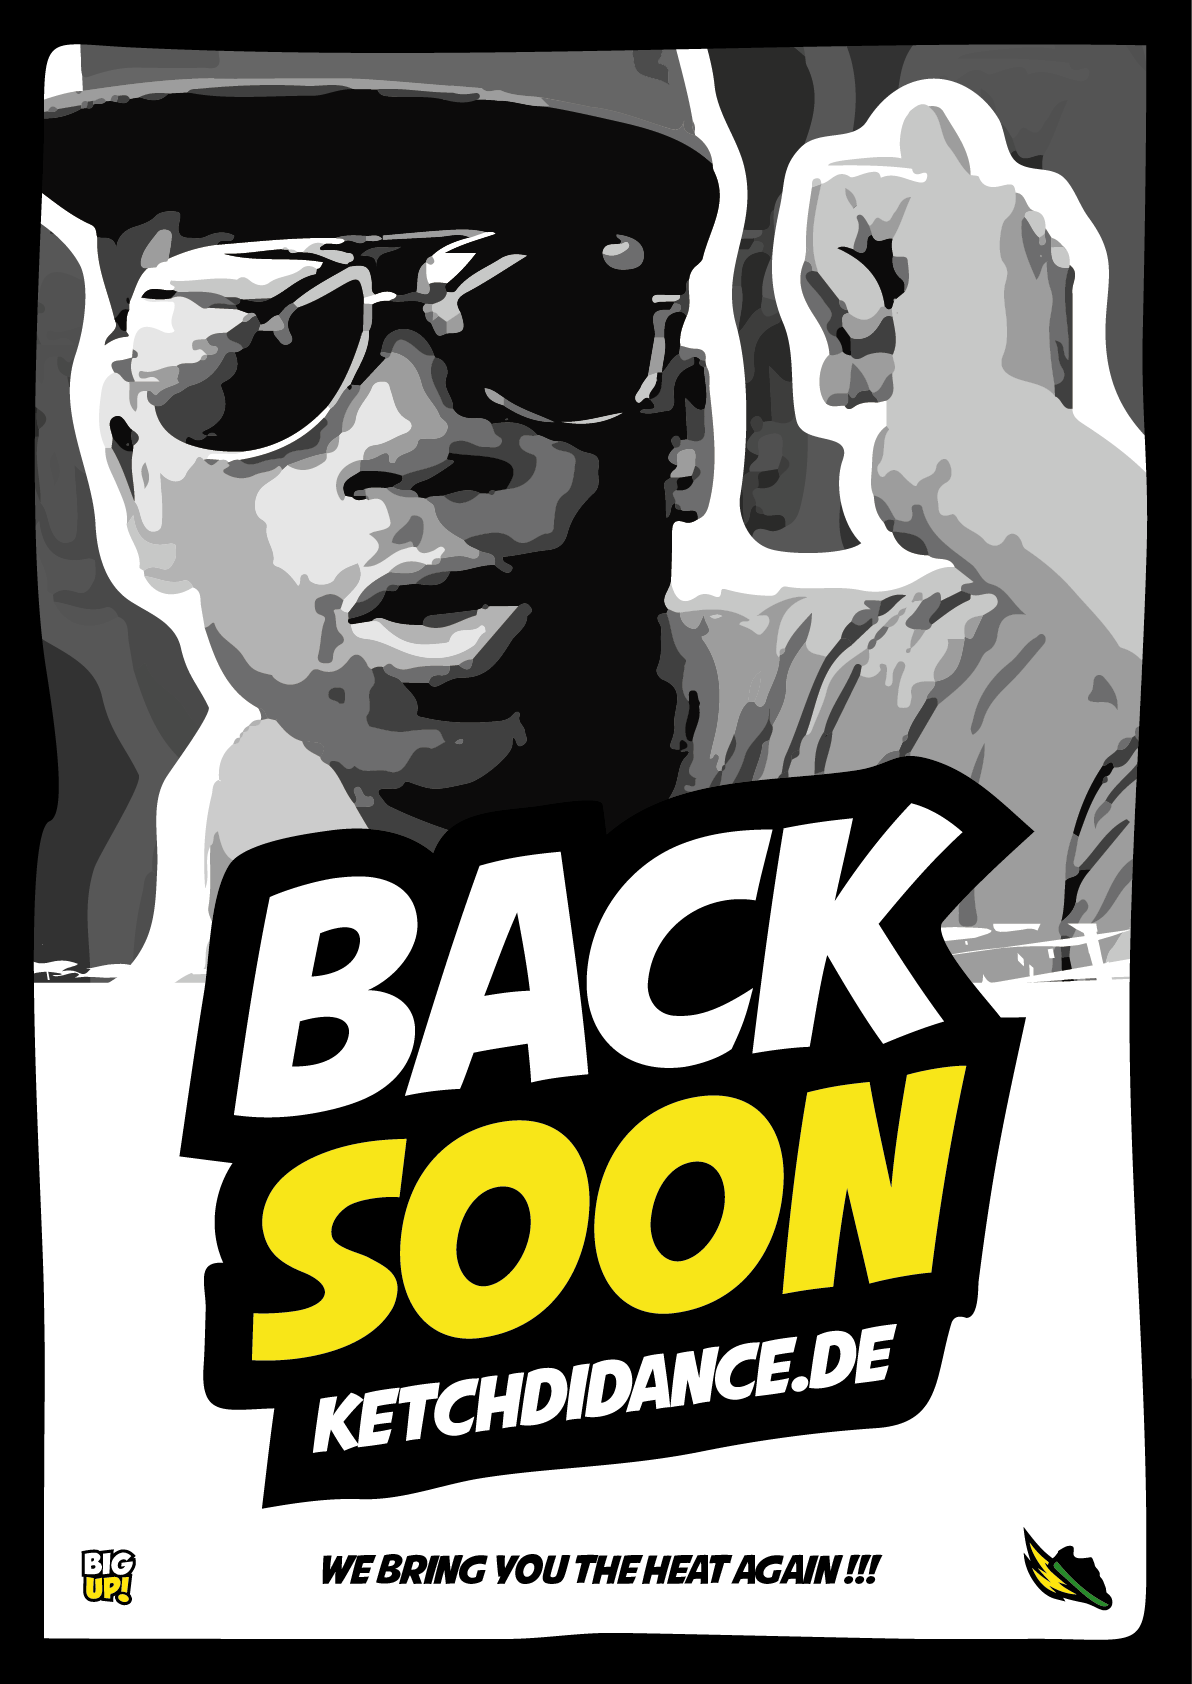 Ketch di dance_jena dancehall_caribbean_afrobeat